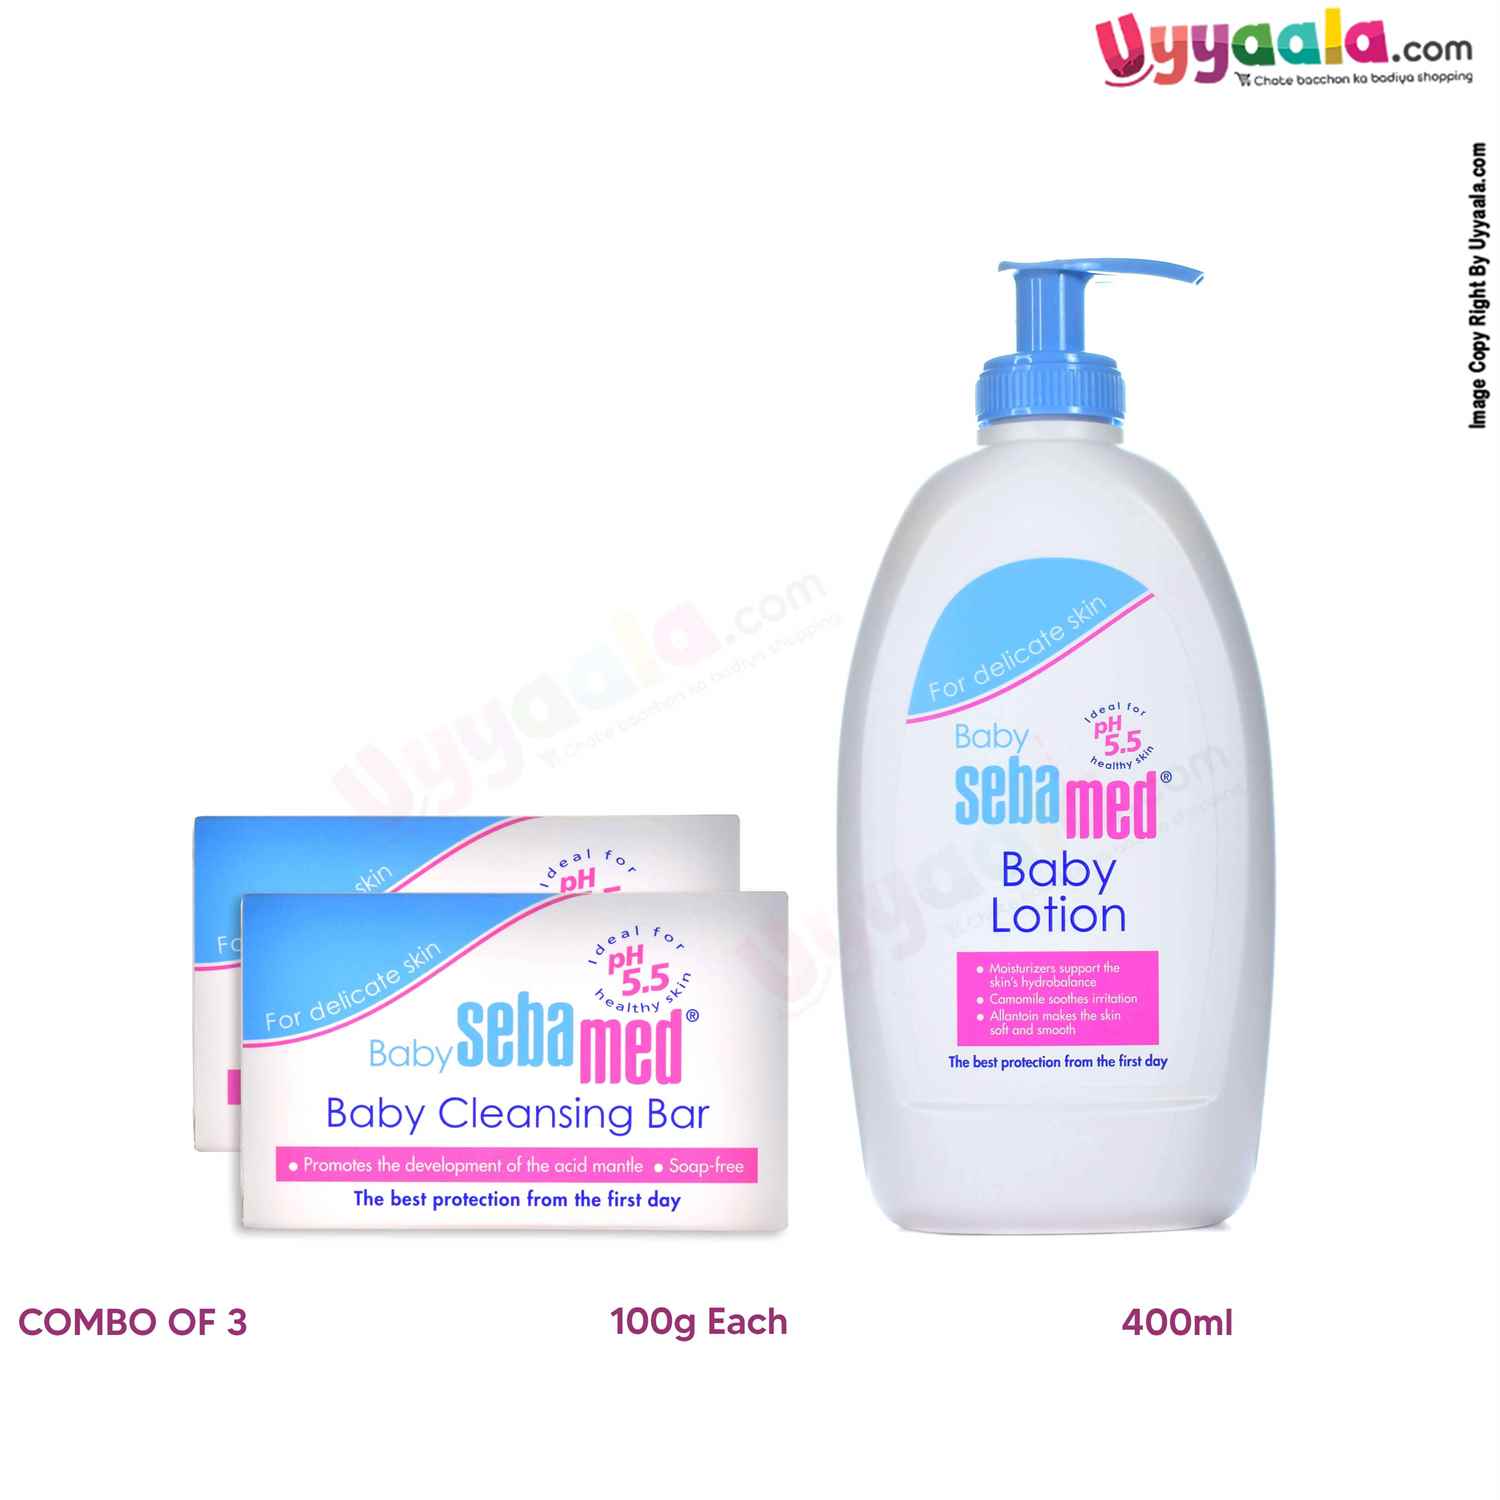 SEBAMED Baby Cleansing Bar 100g Pack of 2 & Baby Lotion Soft Skin 400ml ( Combo Pack )